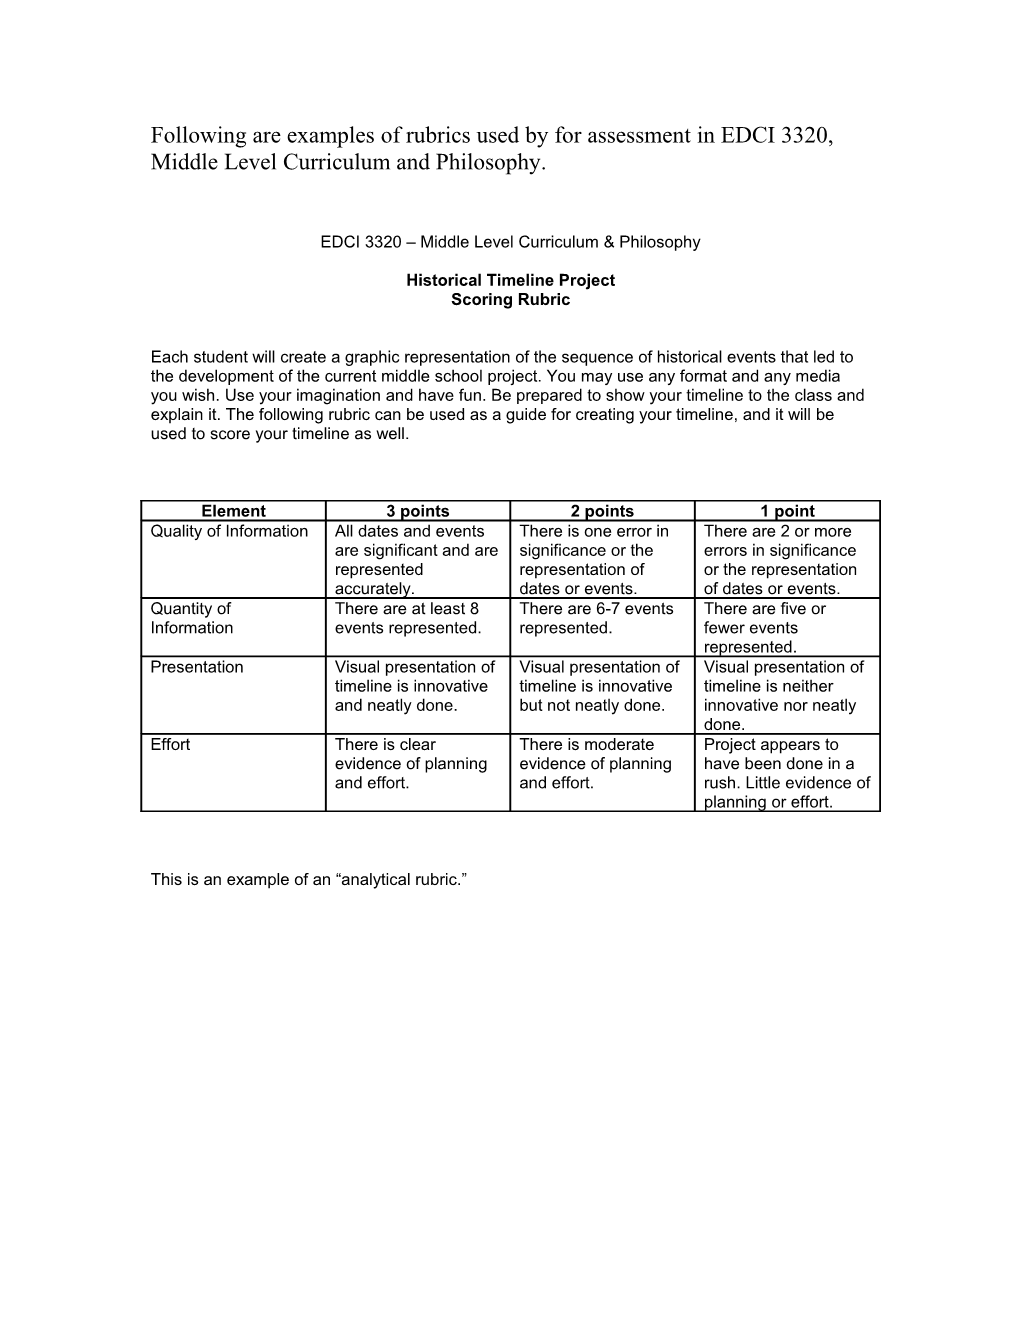 EDCI 3320 Middle Level Curriculum & Philosophy